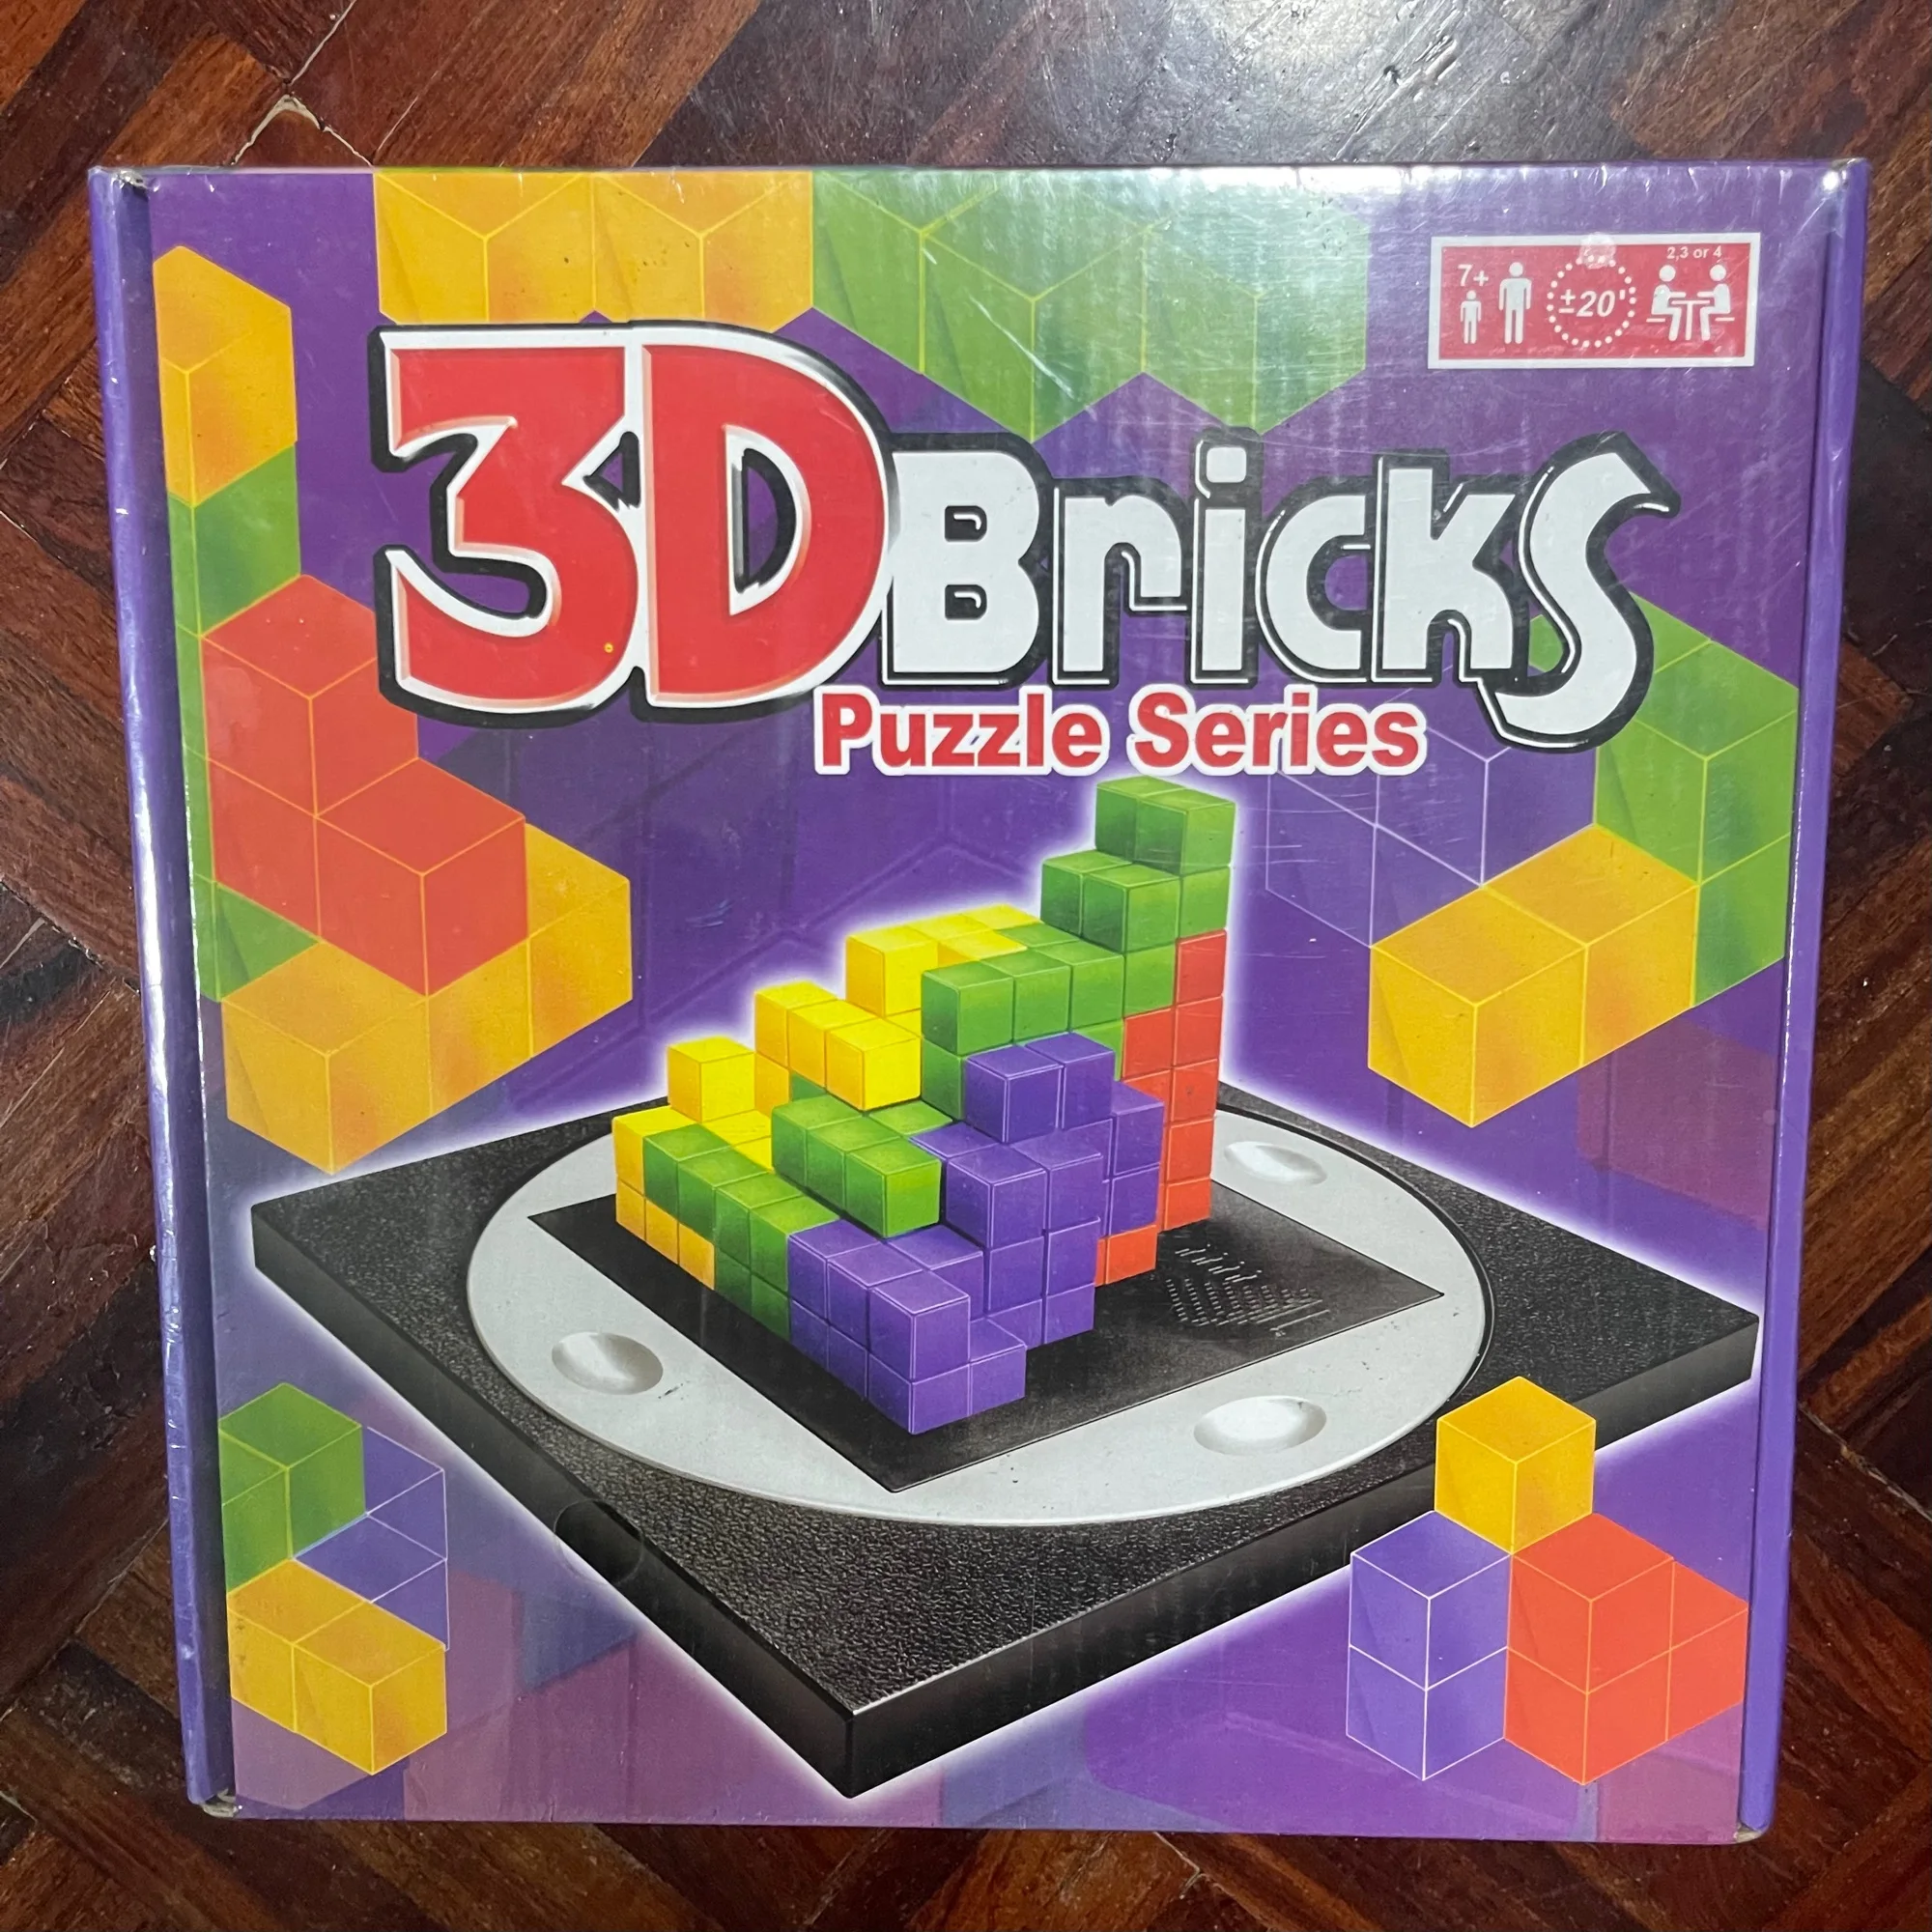 3d brick puzzle series เกมส์เรียง brick 3 มิติ ถาดหมุนได้แข่งขัน 2-4คน